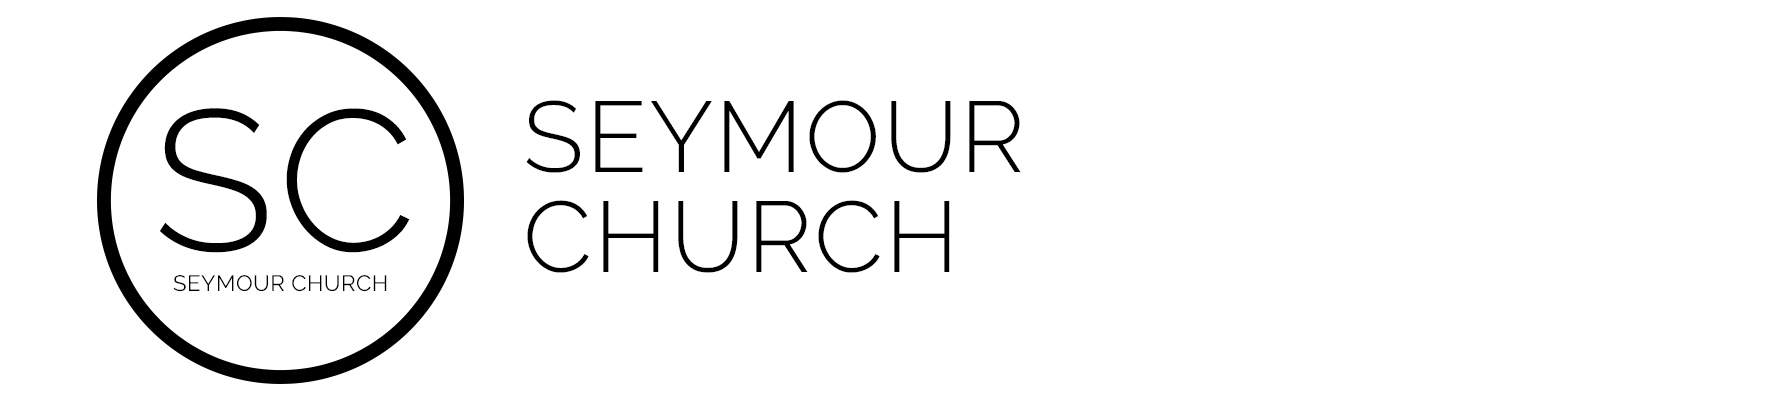 Seymour Church